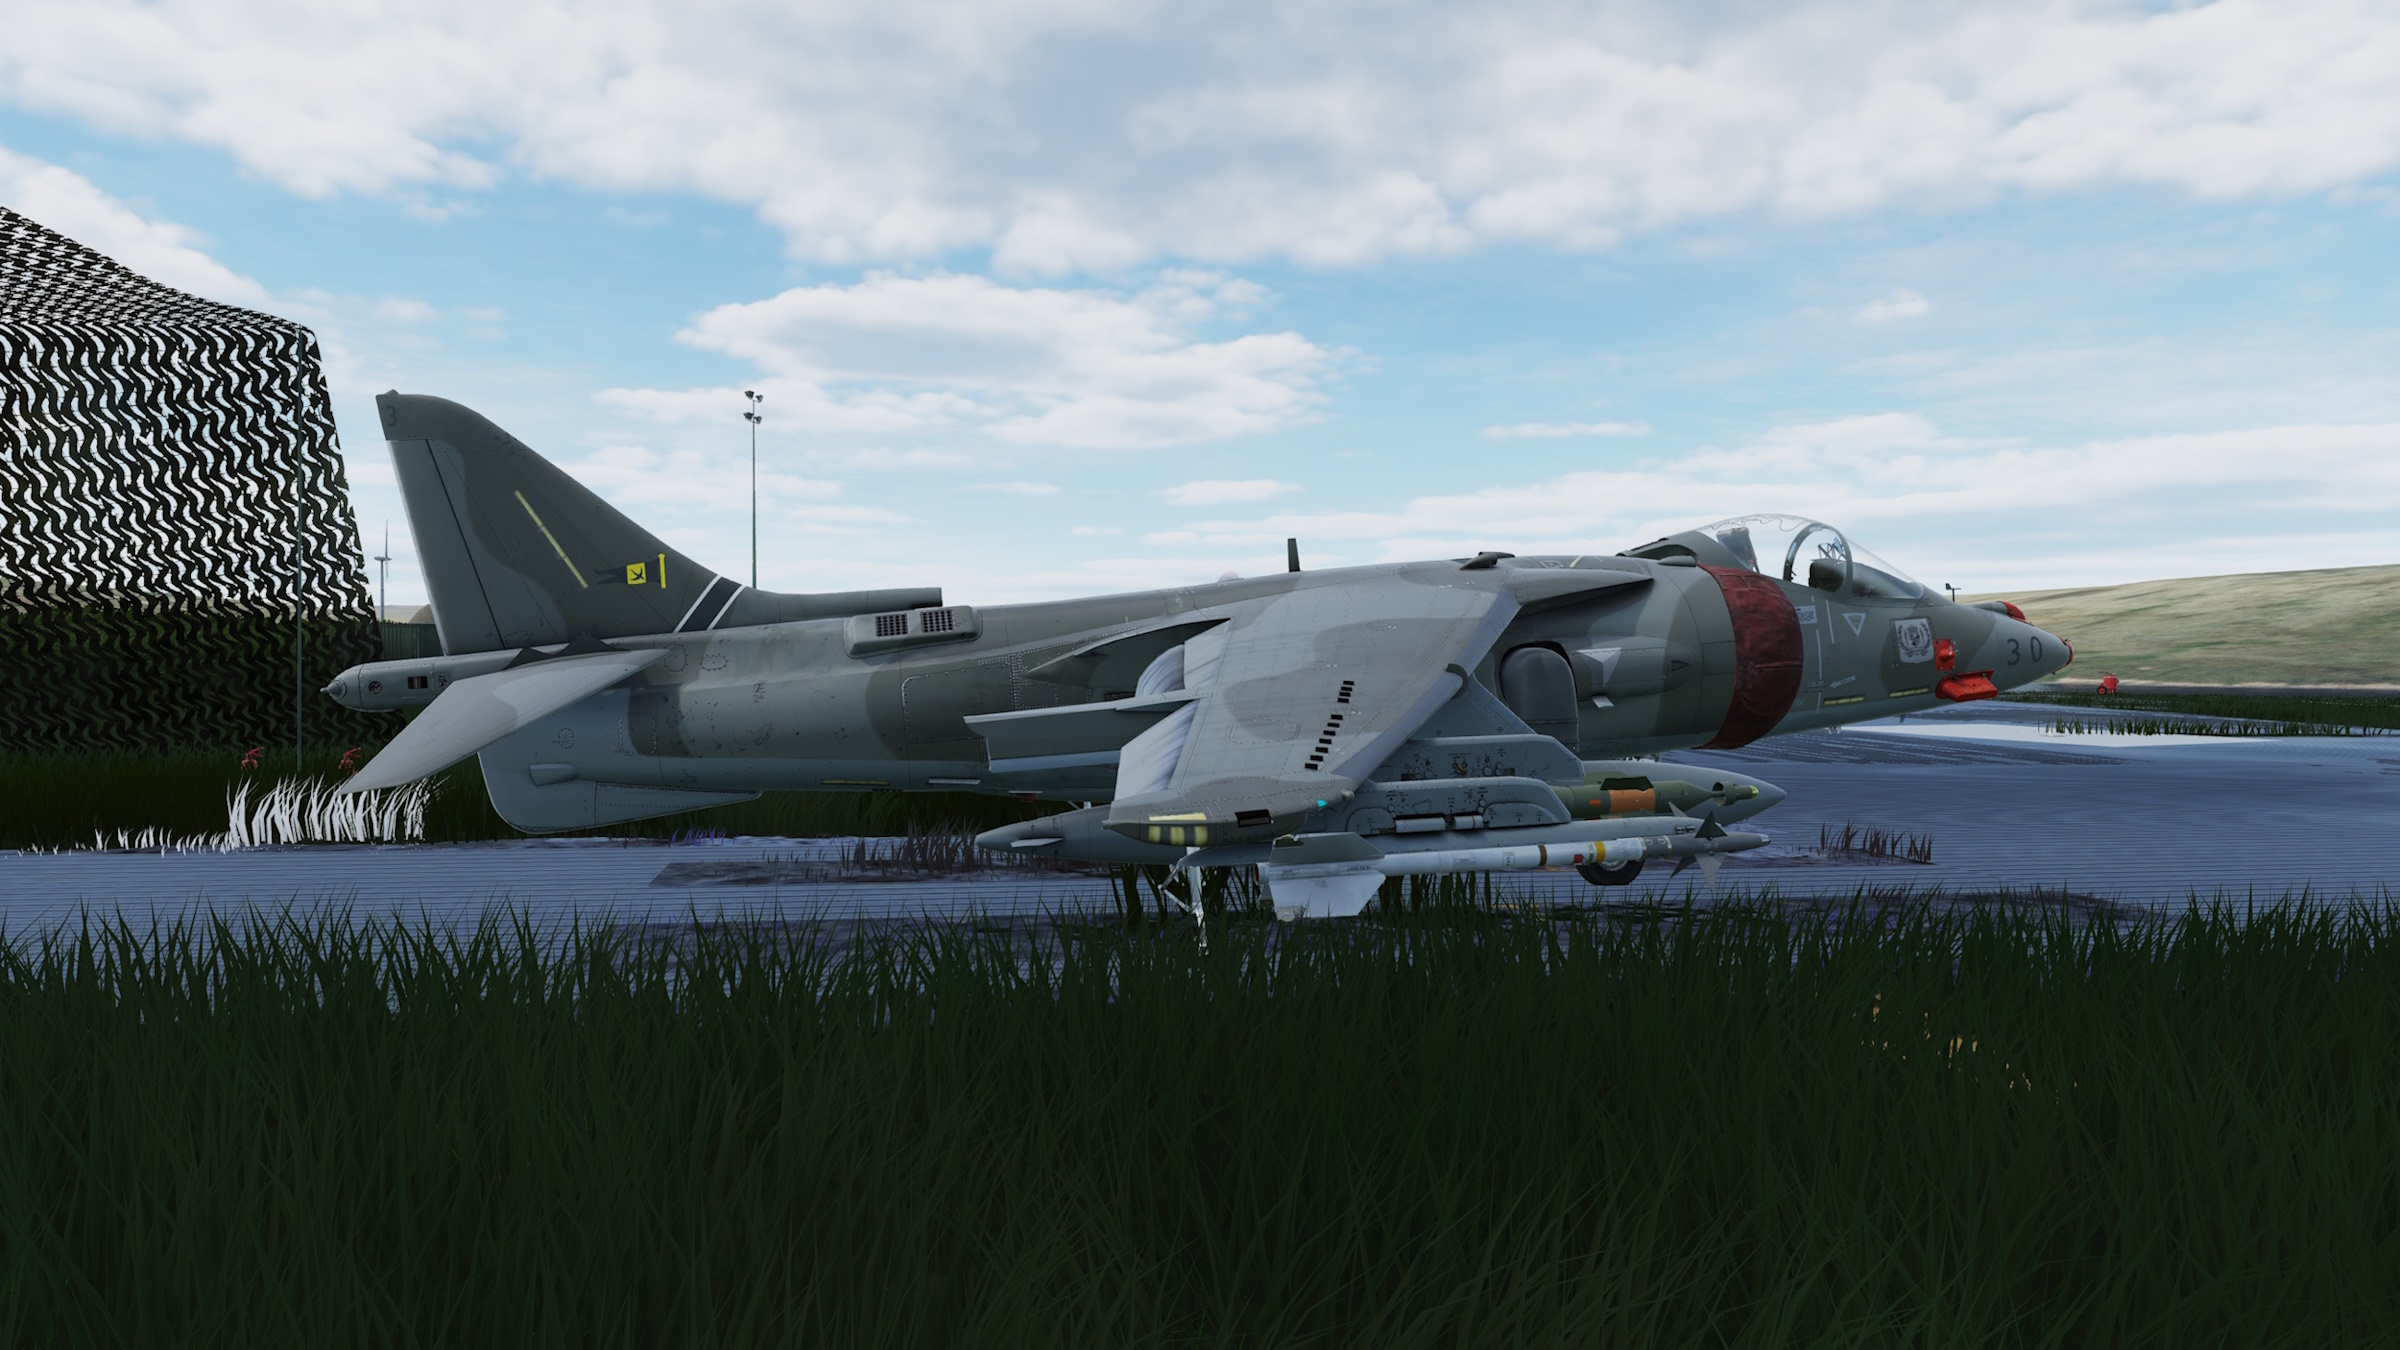  ACE COMBAT - AV-8BNA - Nordennavic Royal Air Force - Sqn "Navarre"